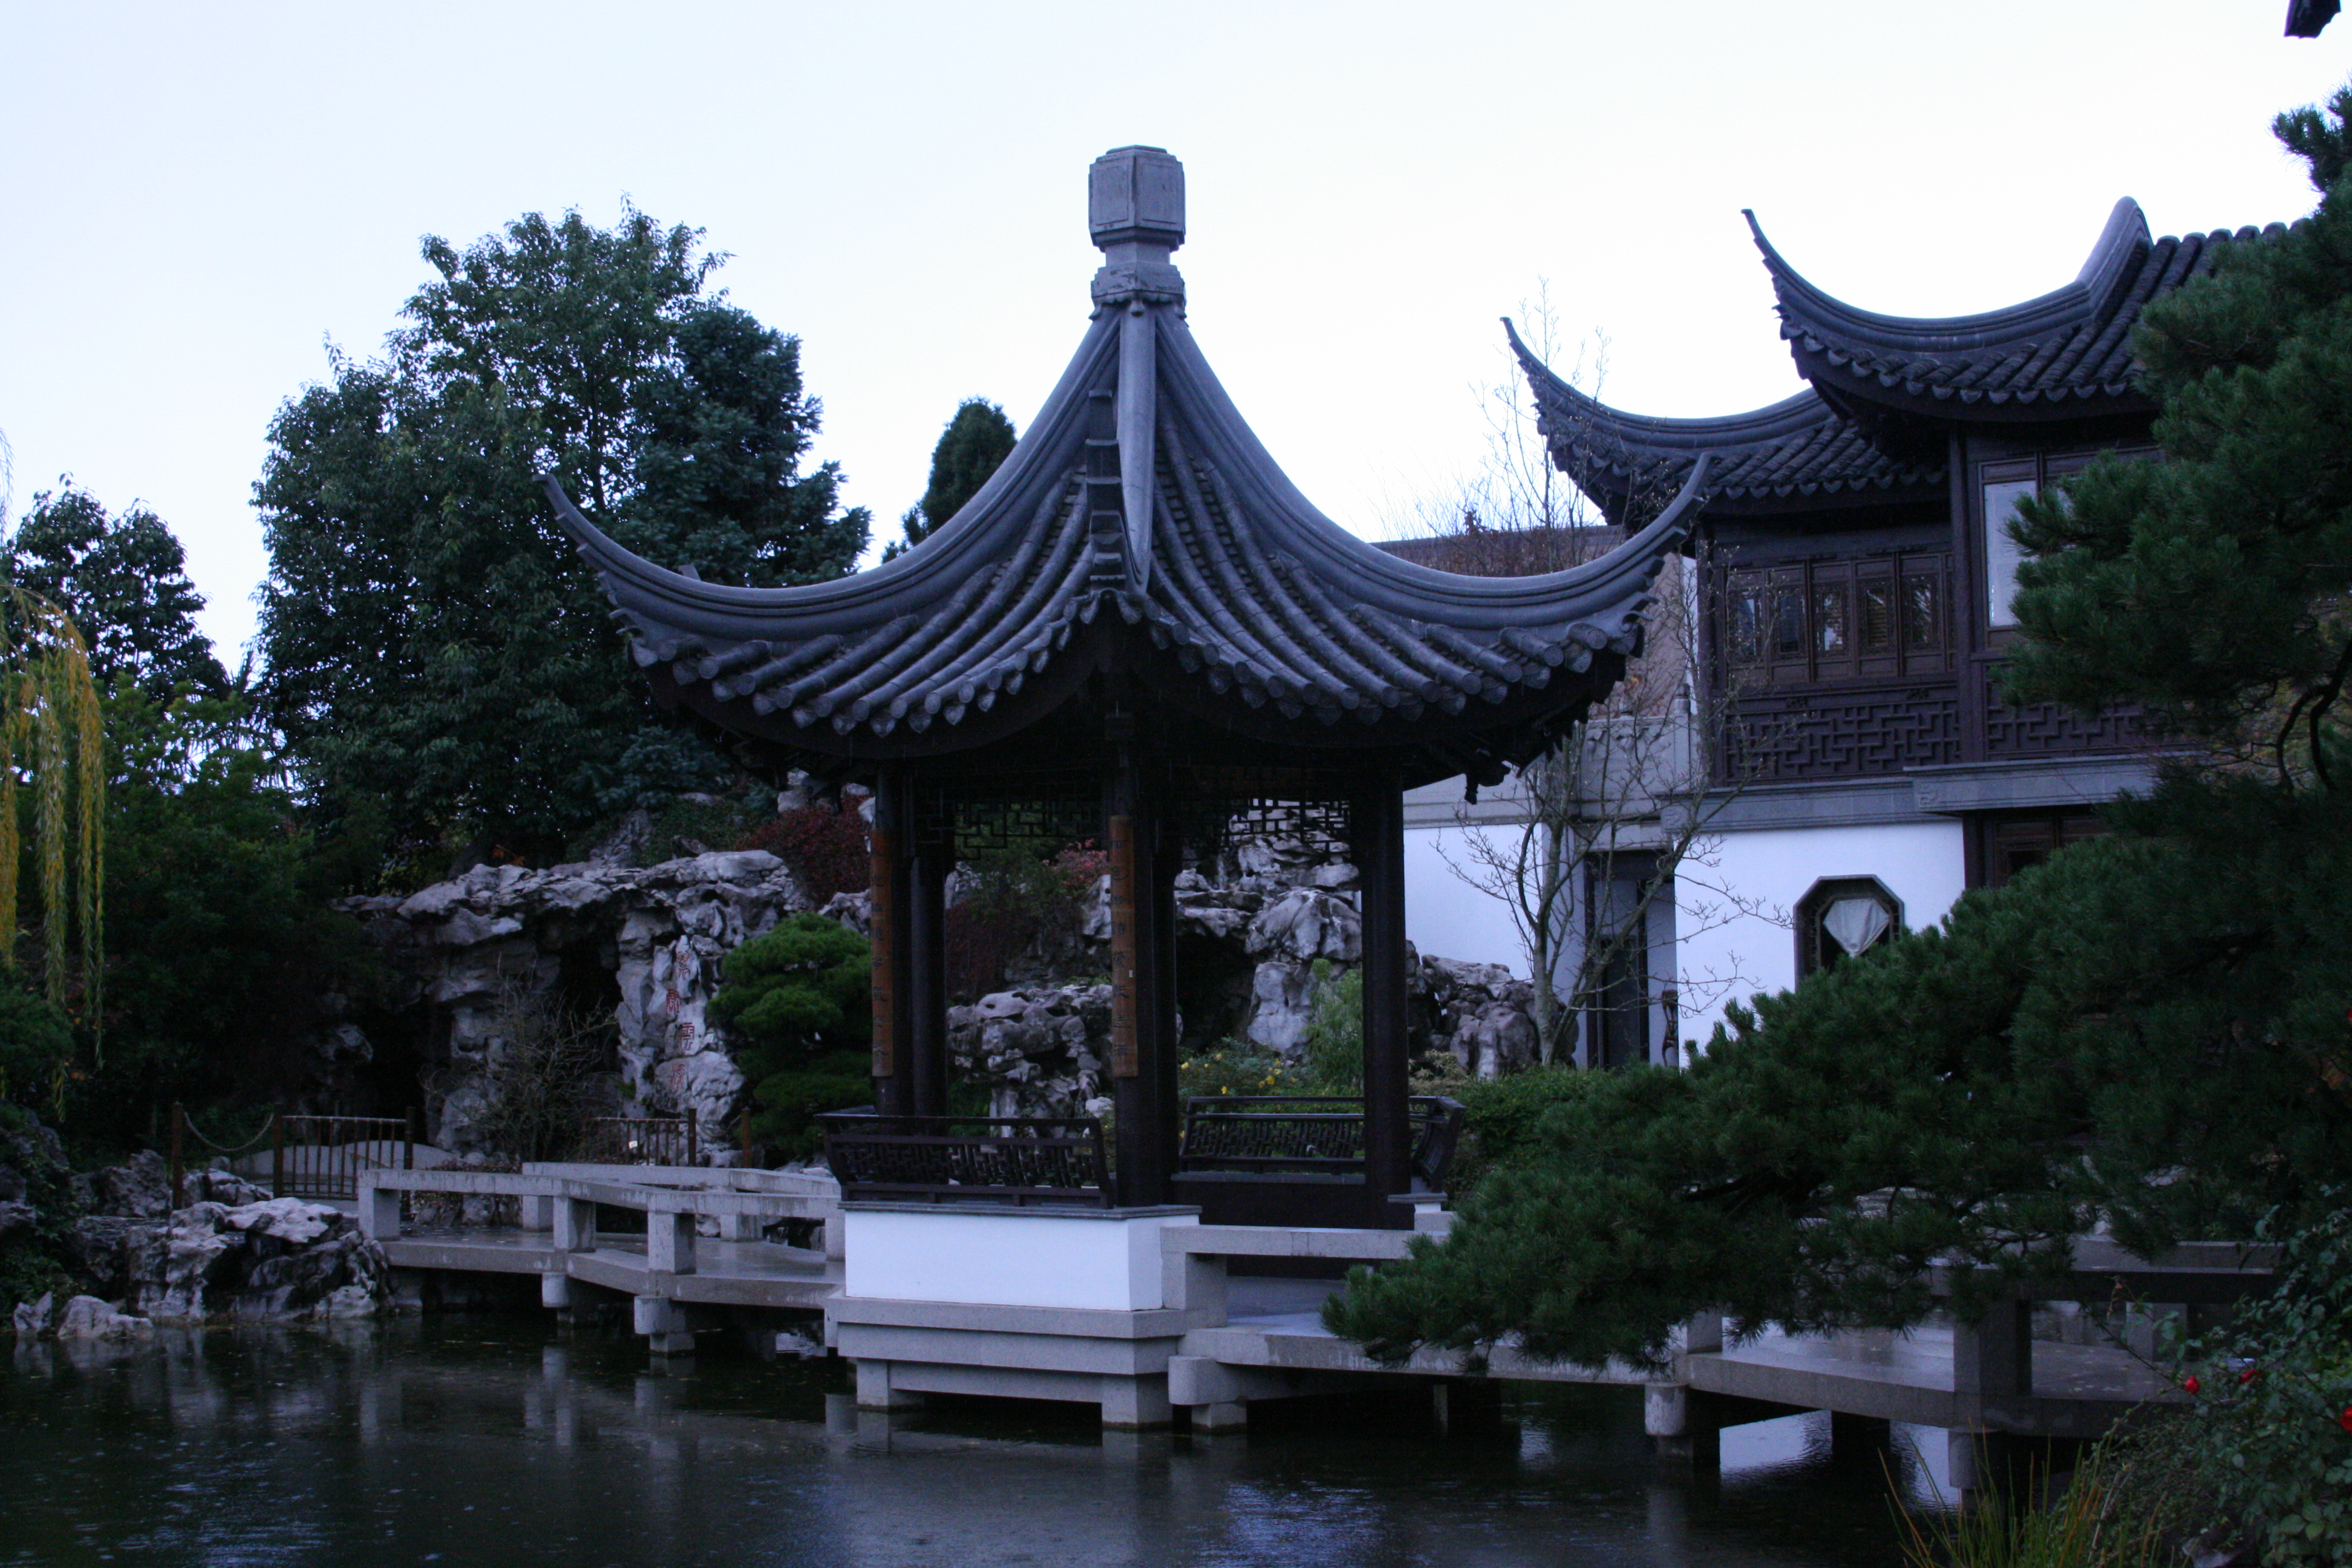 Gazebo and Pond in Chinese Garden